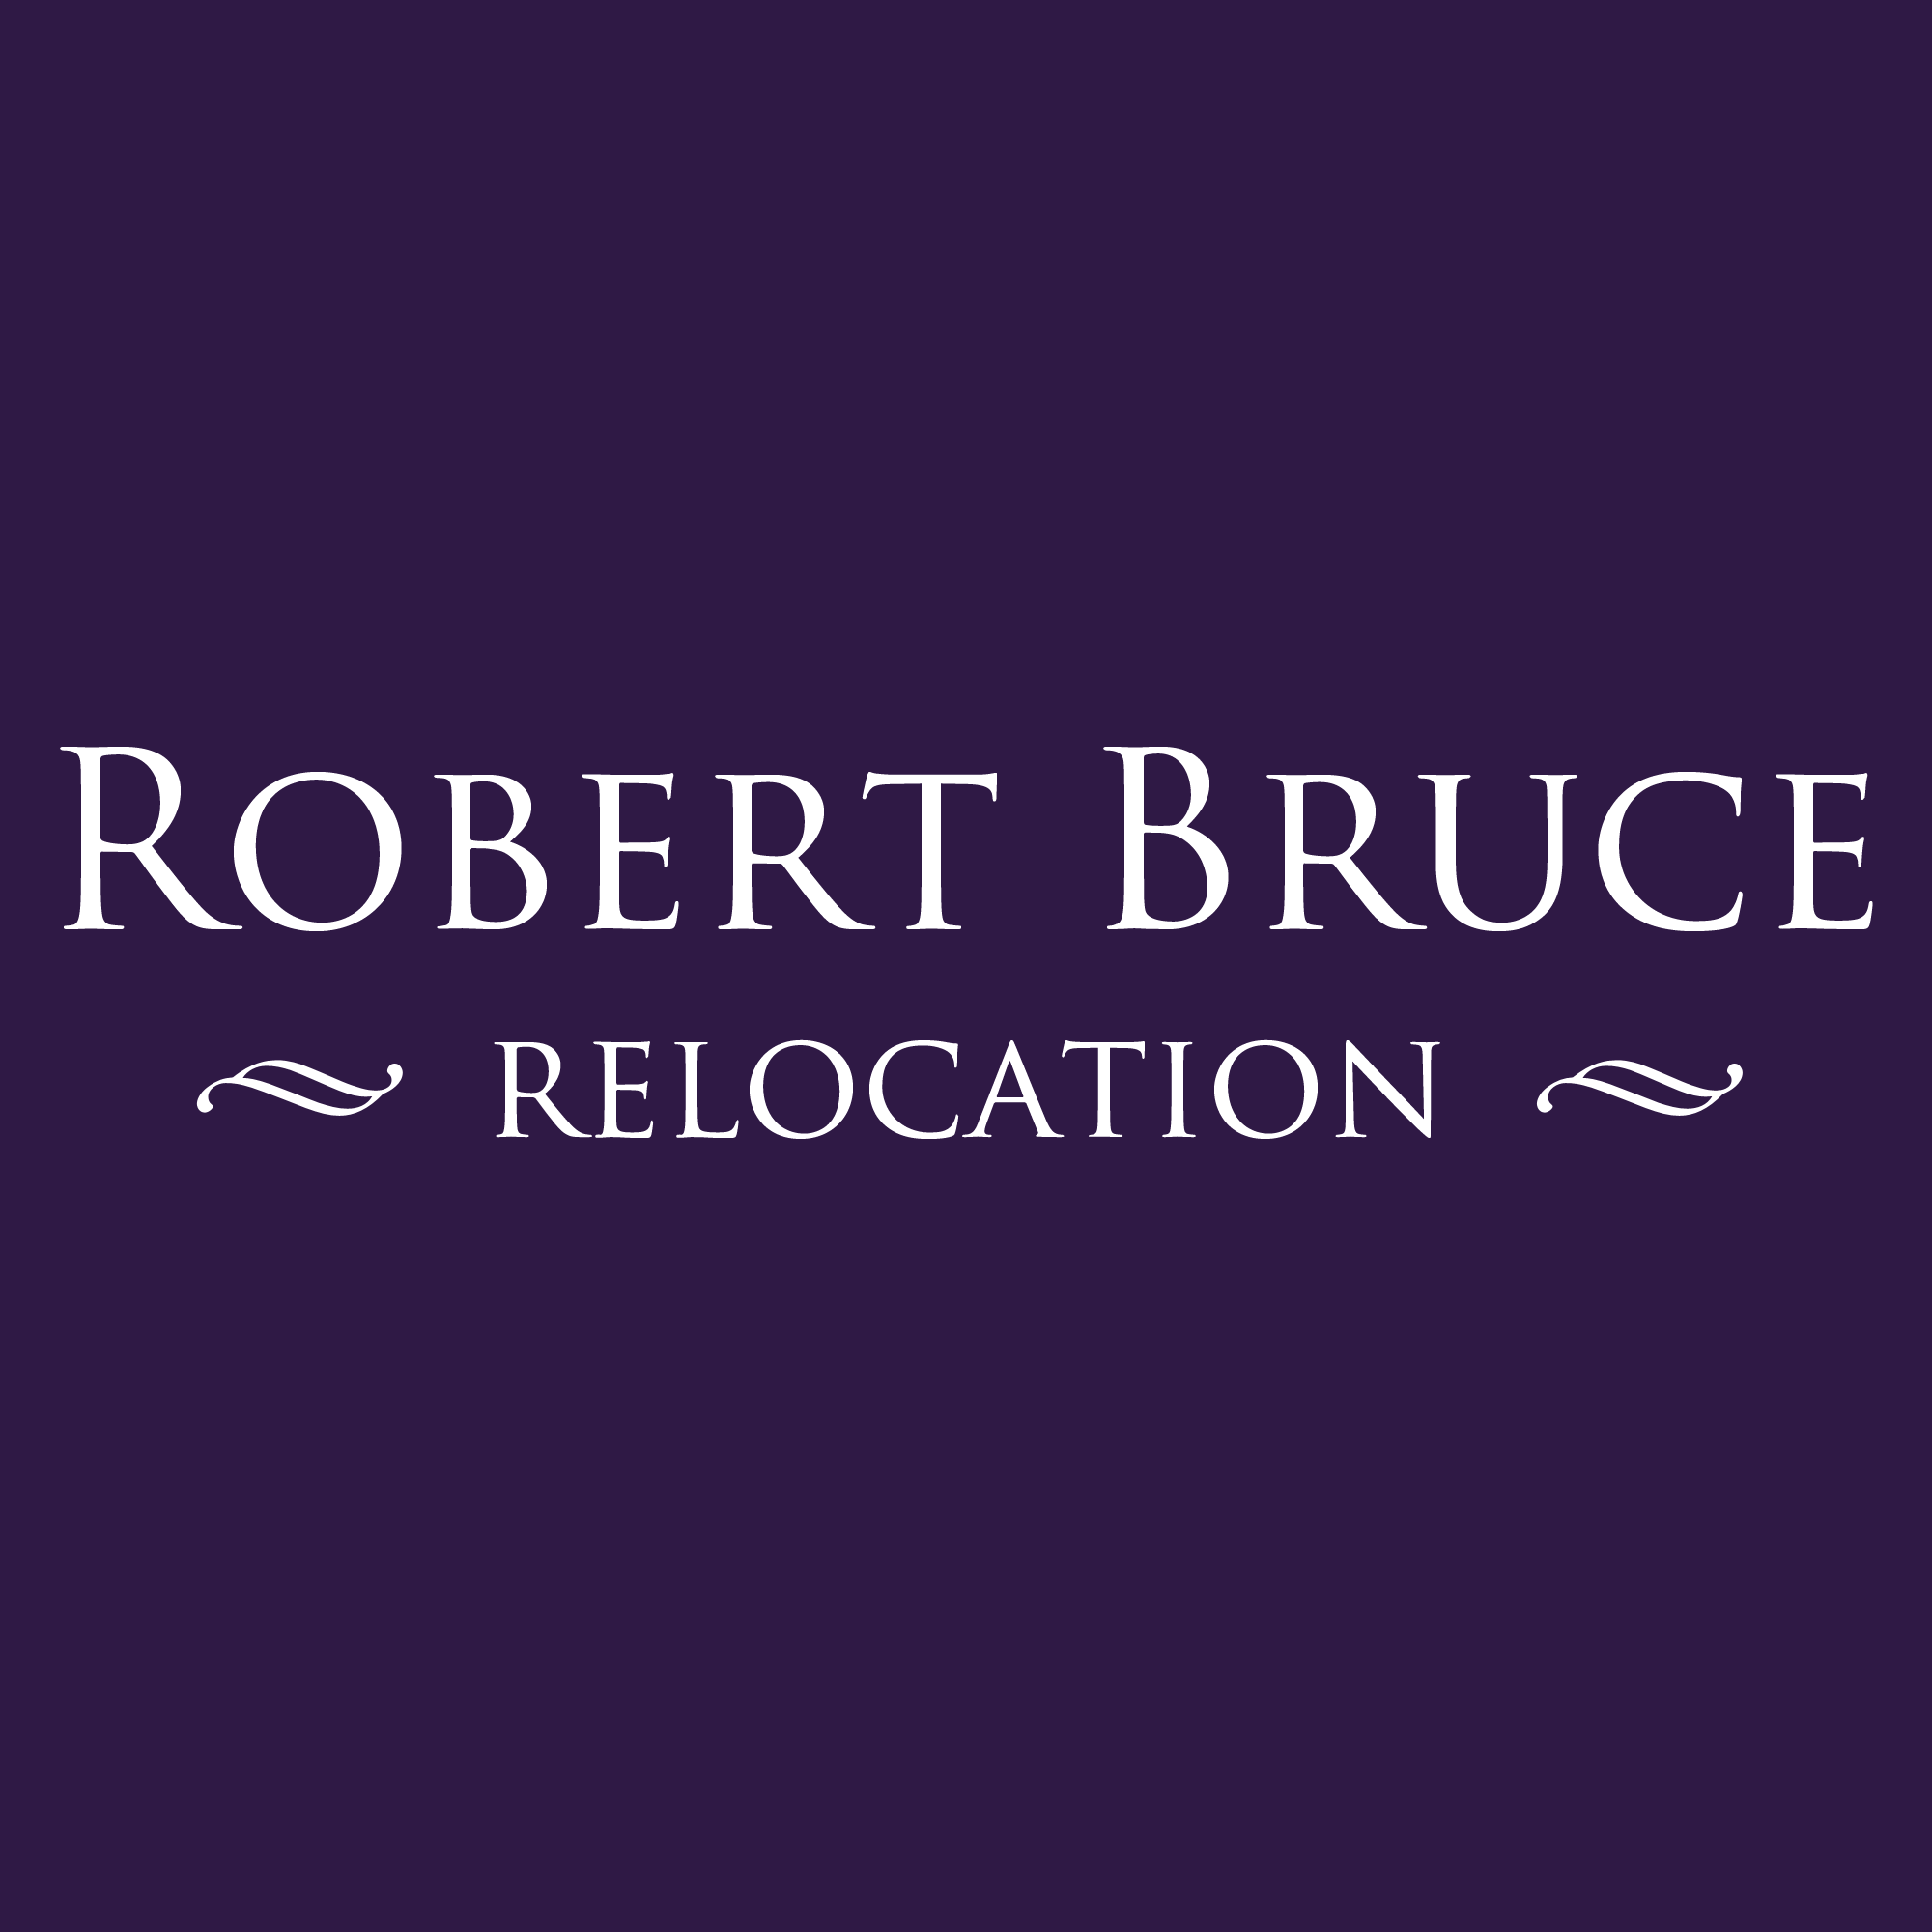 Robert Bruce Relocation